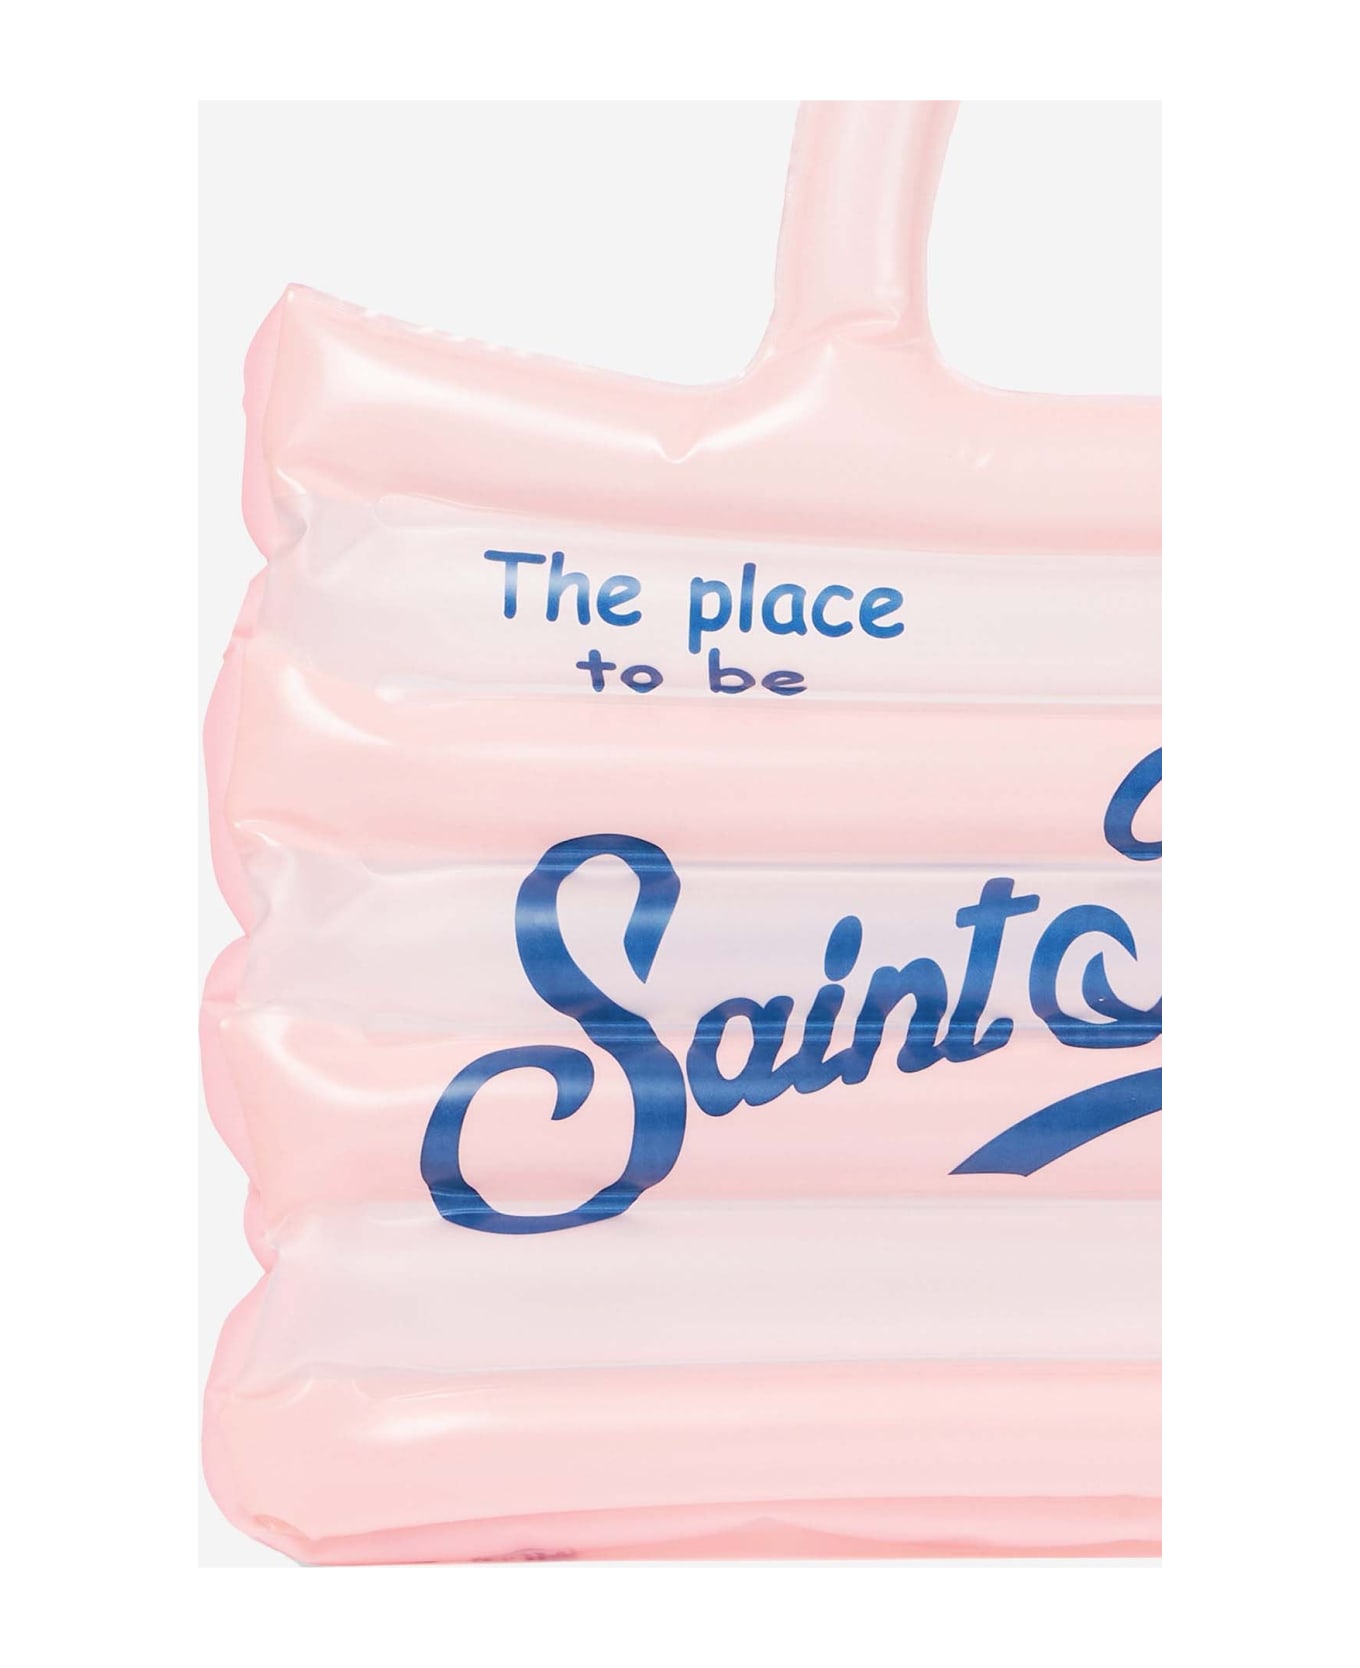 MC2 Saint Barth Vanity White And Pink Inflatable Shoulder Bag - PINK